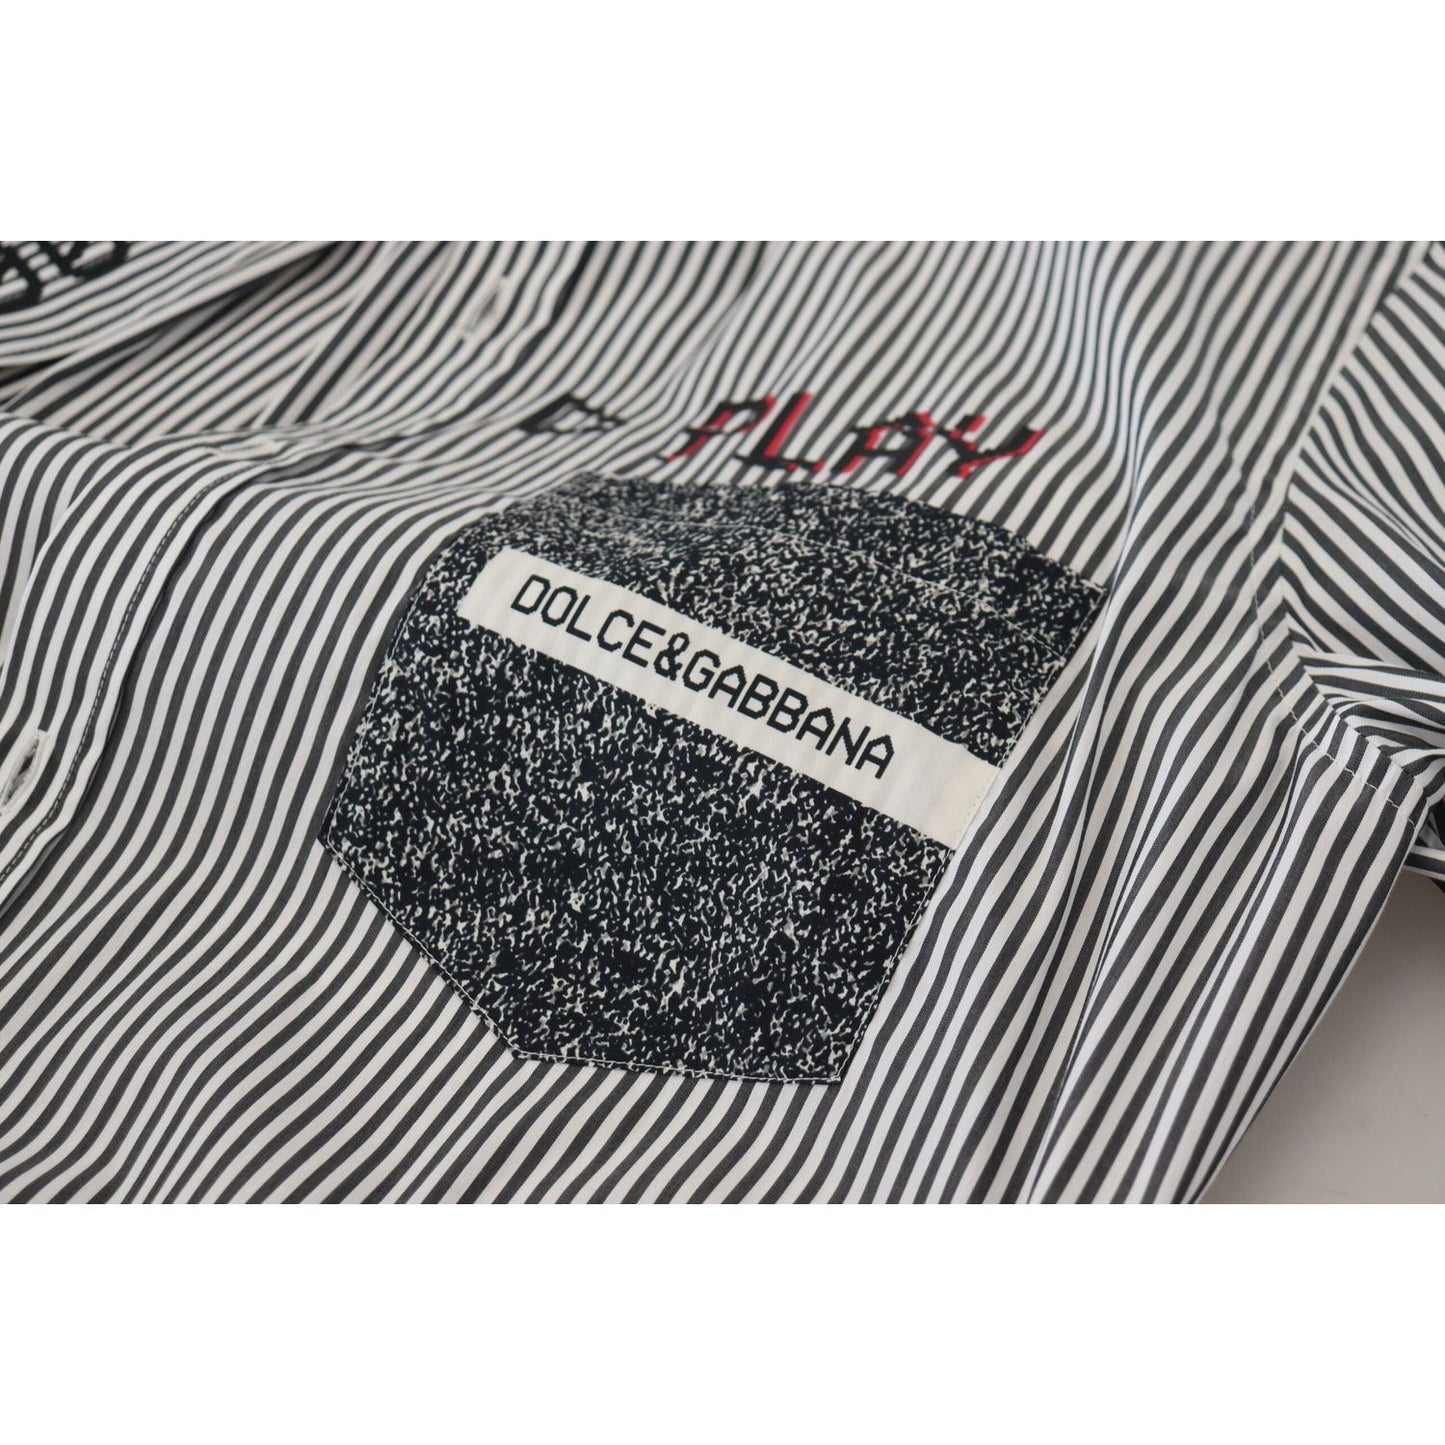 Dolce & GabbanaClassic Black and White Striped Button-Down ShirtMcRichard Designer Brands£489.00